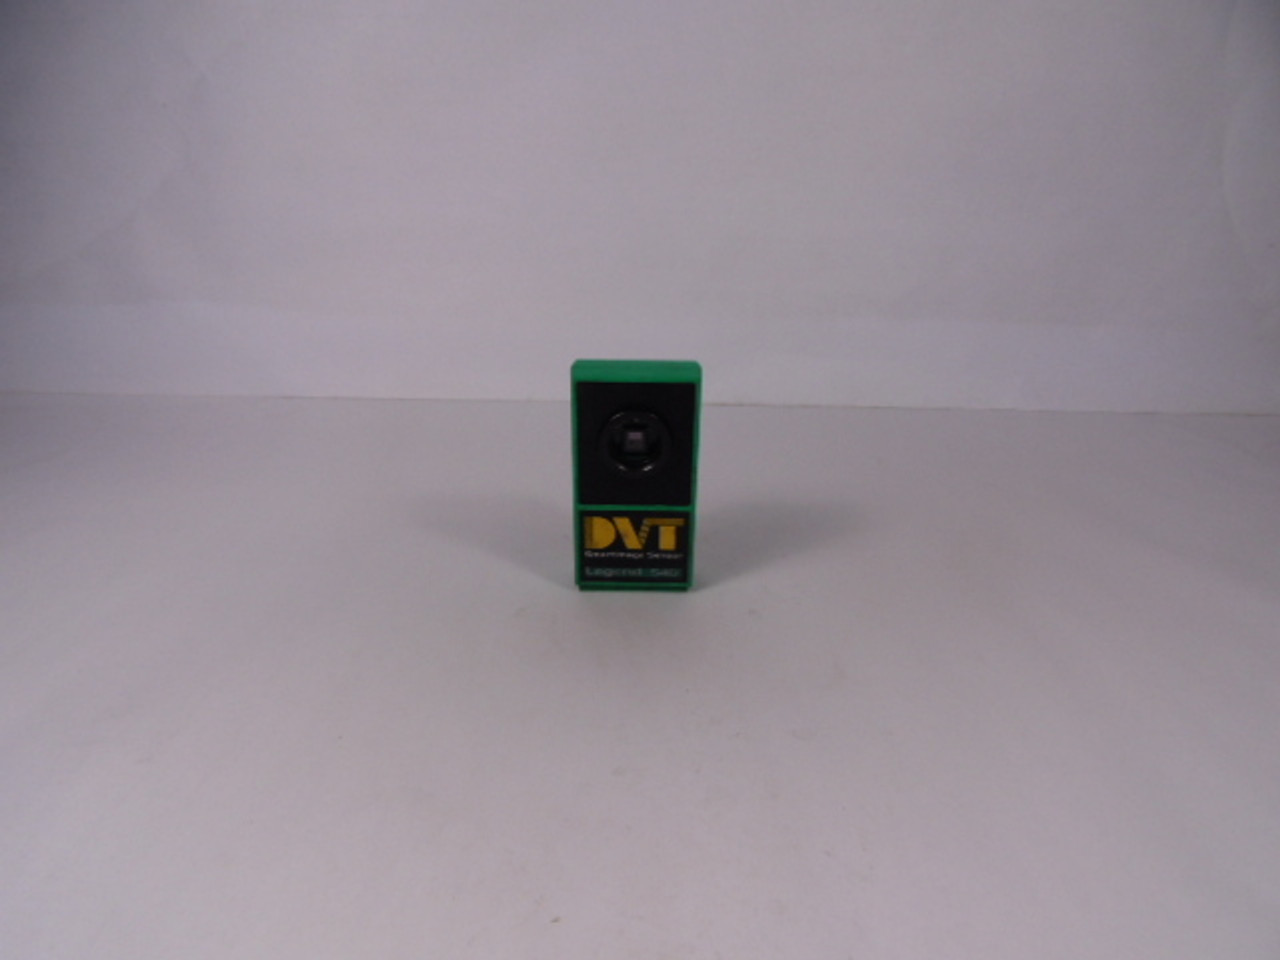 DVT 540M HI-Speed Smart Image Camera Sensor USED